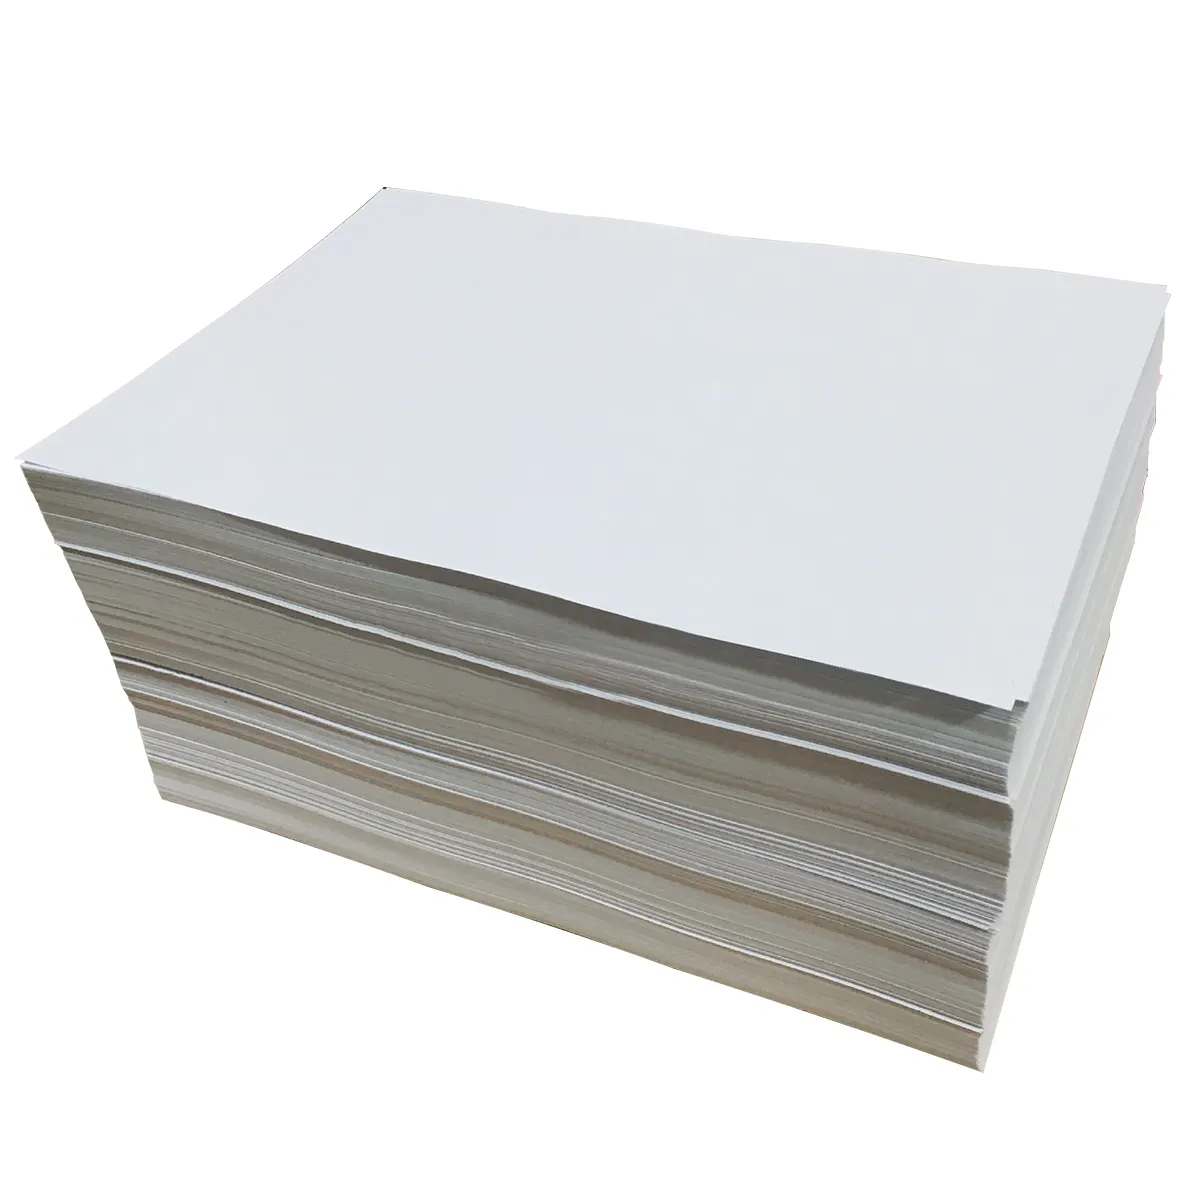 Kertas lembar kertas tahan temperatur tinggi kertas lepas lapis silikon kertas rilis putih